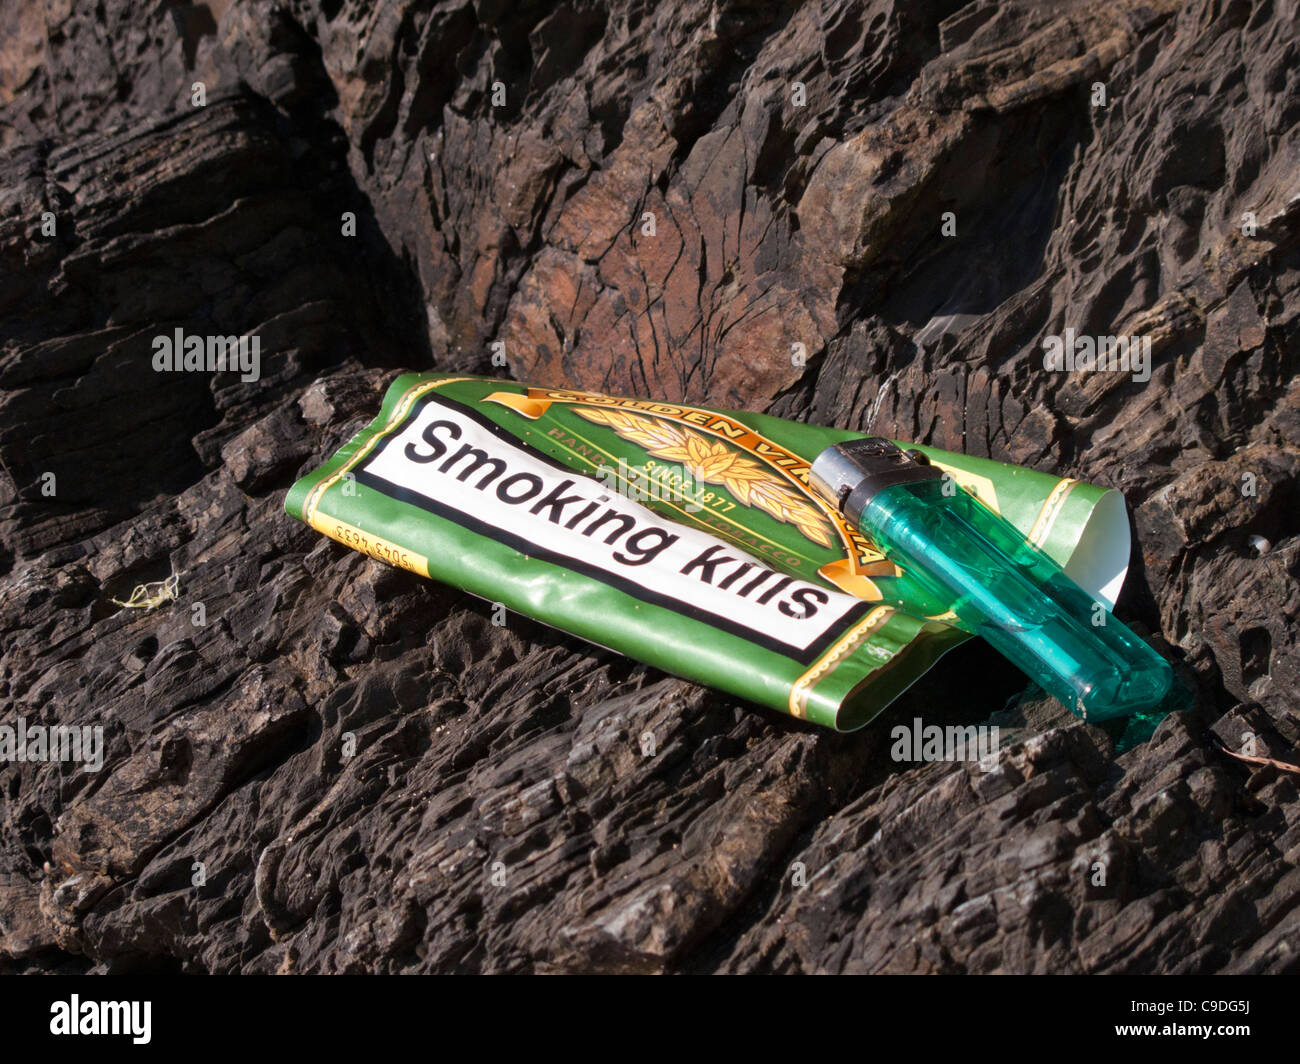 Llangrannog Llandysul Dyfed Roll ups cigarette paraphenalia left on beach Stock Photo